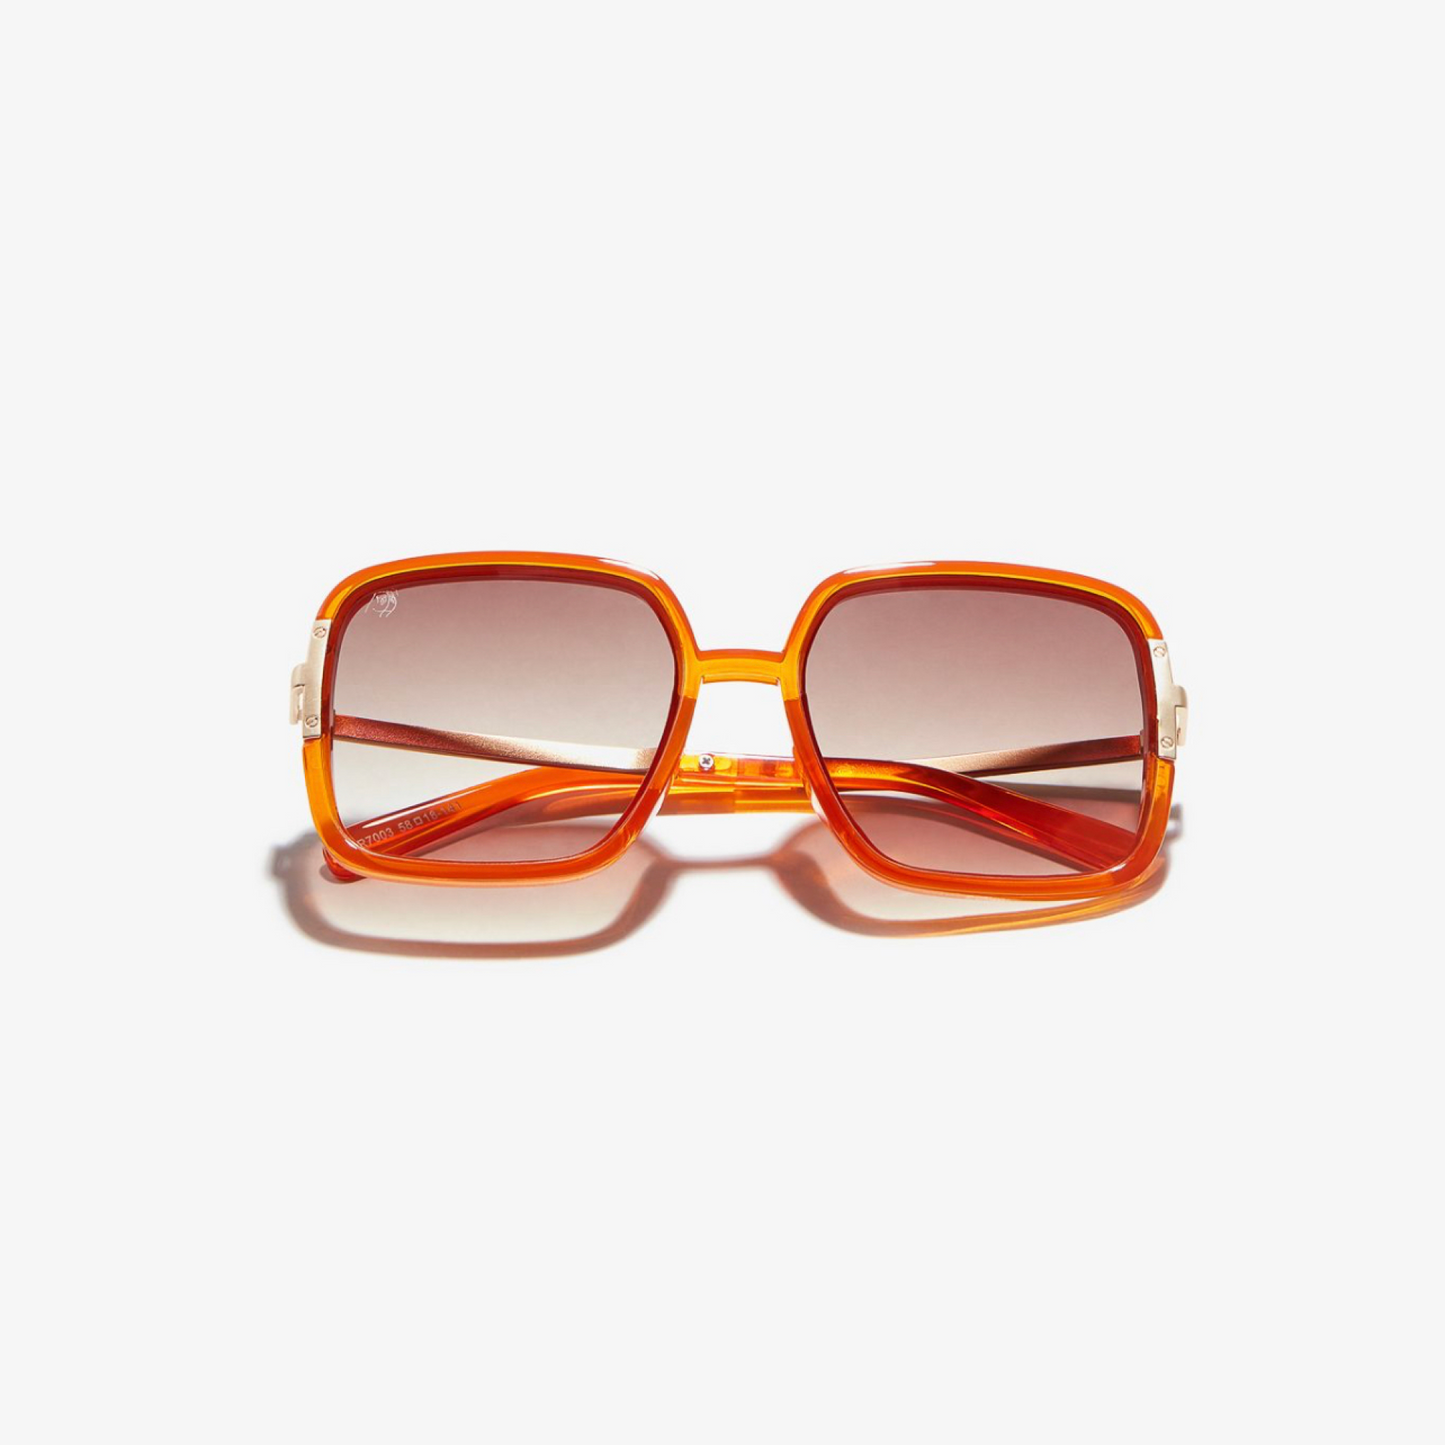 Bell Bottom Country Orange Sunglasses